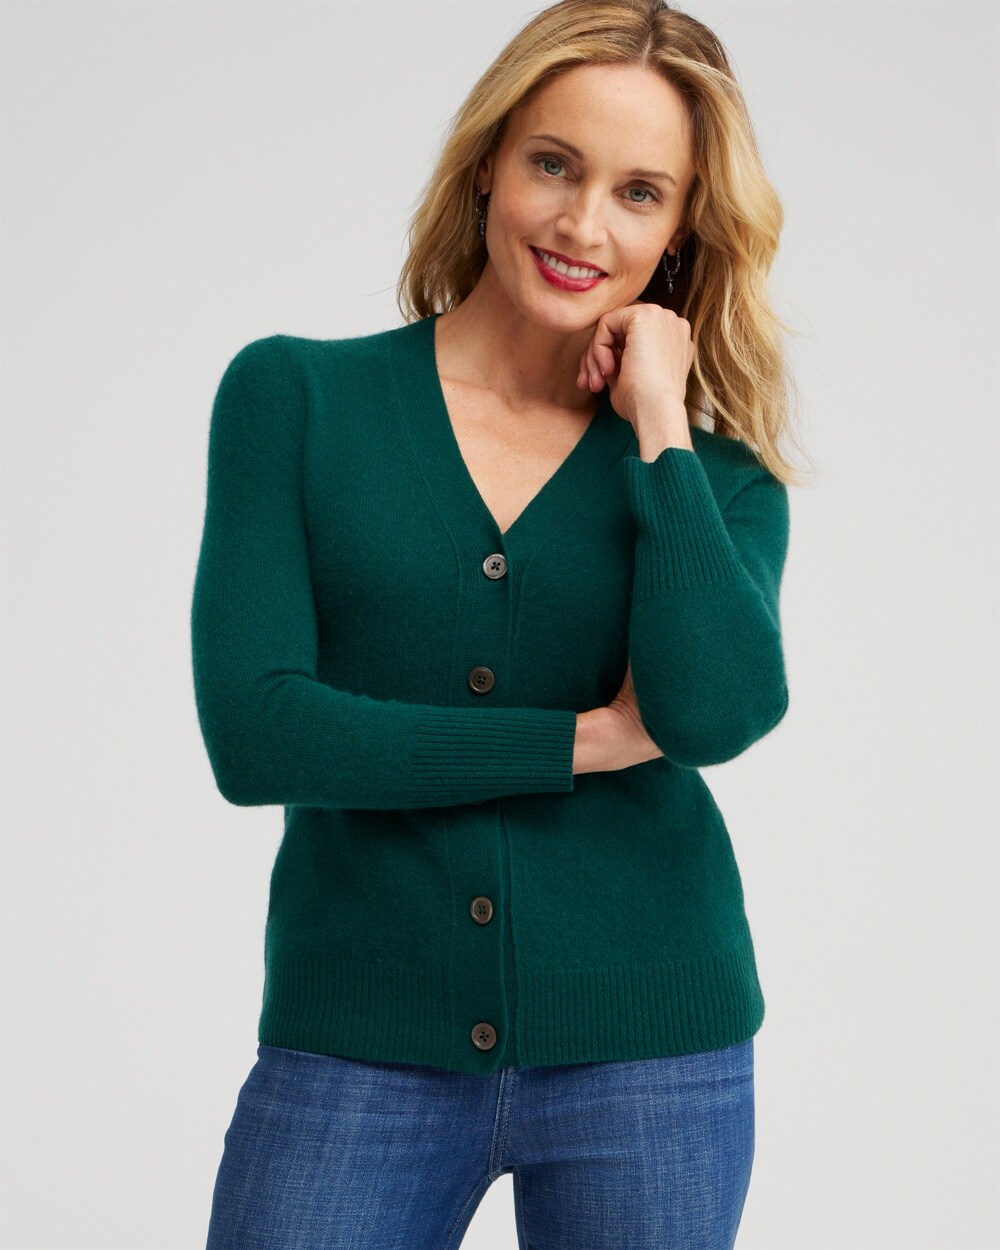 Cashmere Cardigan Sweater